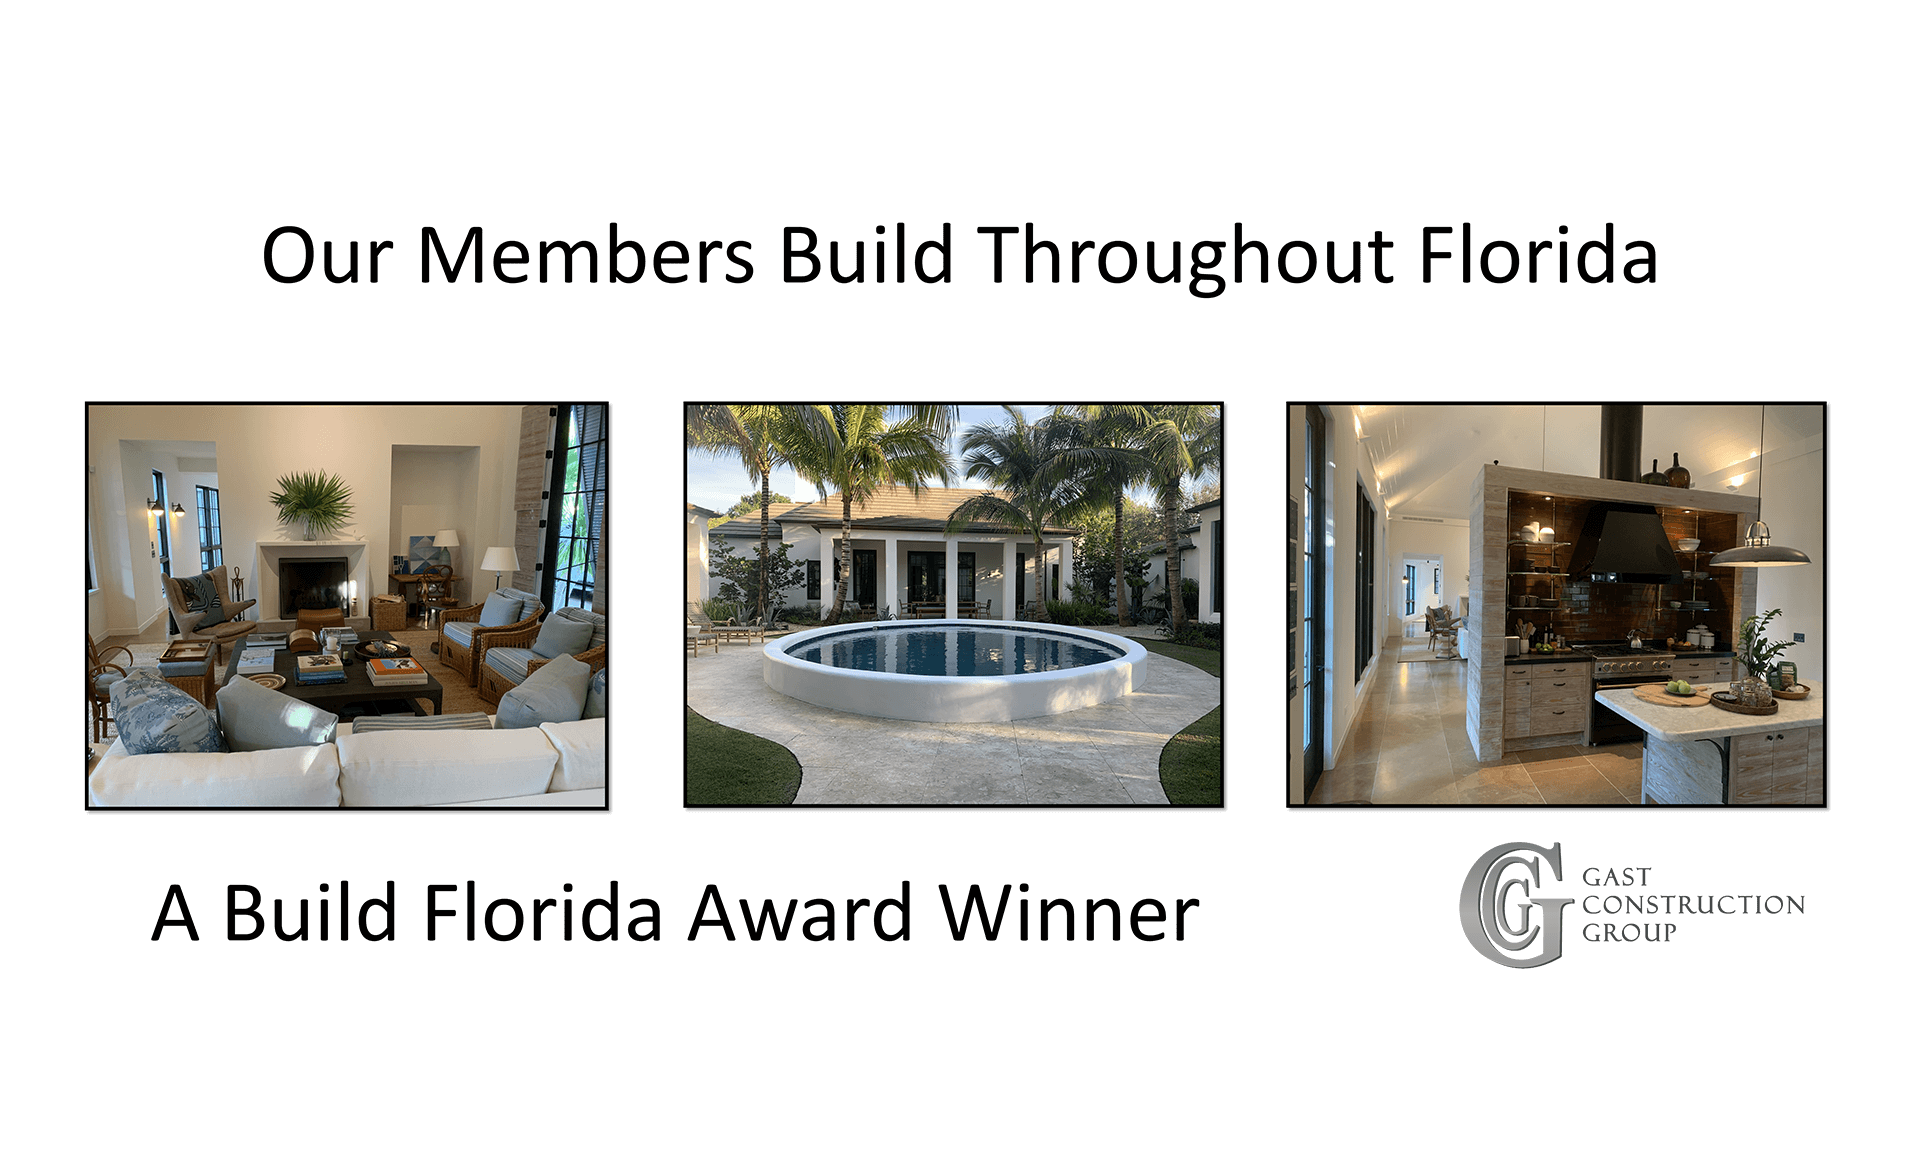 A Build Florida Award Winner Gast